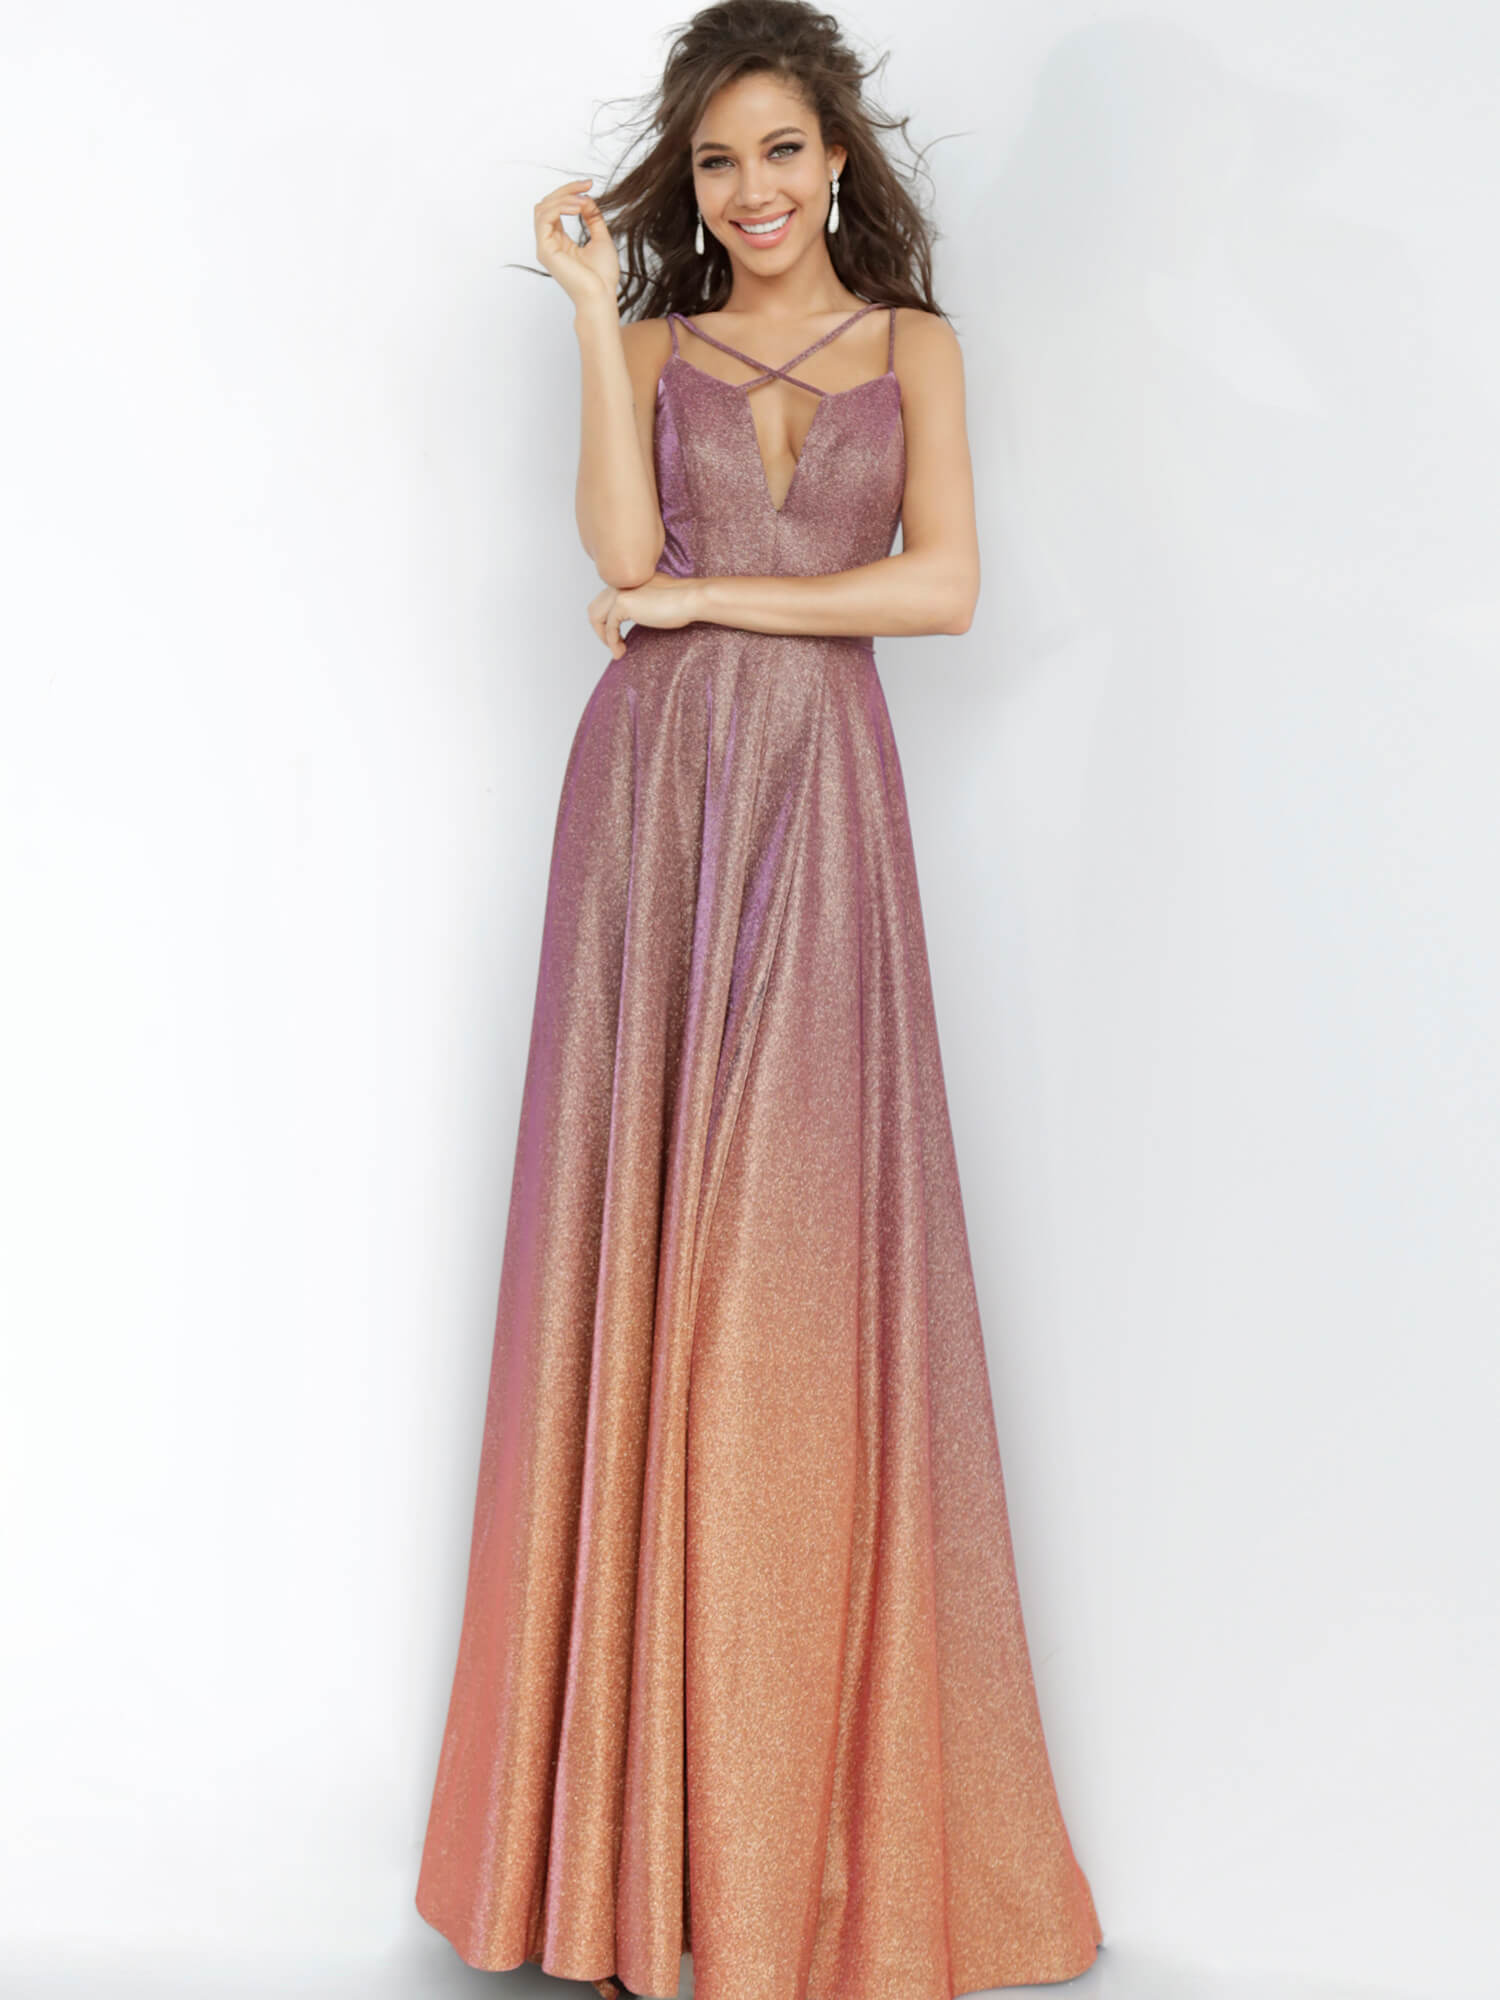 JVN4327 Purple Gold Glitter prom dress, floor length maxi wrap skirt, sleeveless bodice, plunging neckline with spaghetti straps criss cross, spaghetti straps over shoulders, open back.